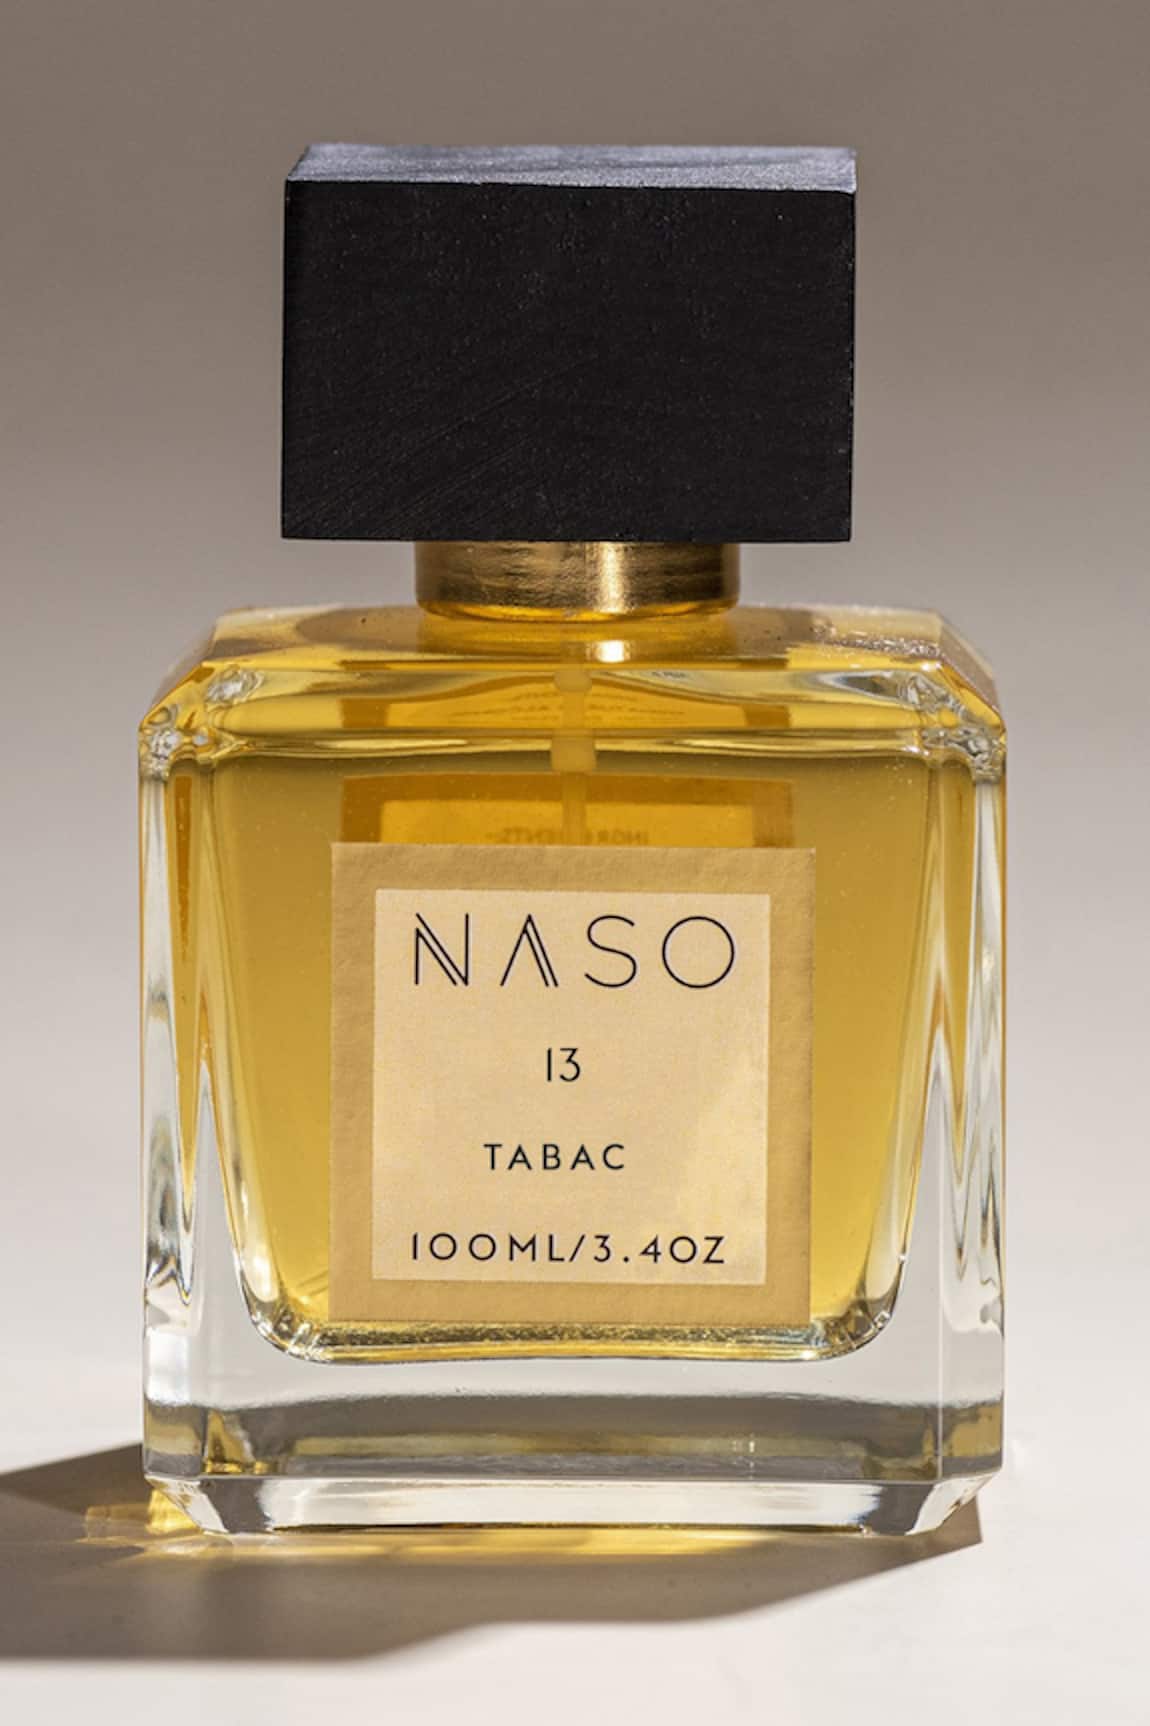 NASO Tabac Perfume